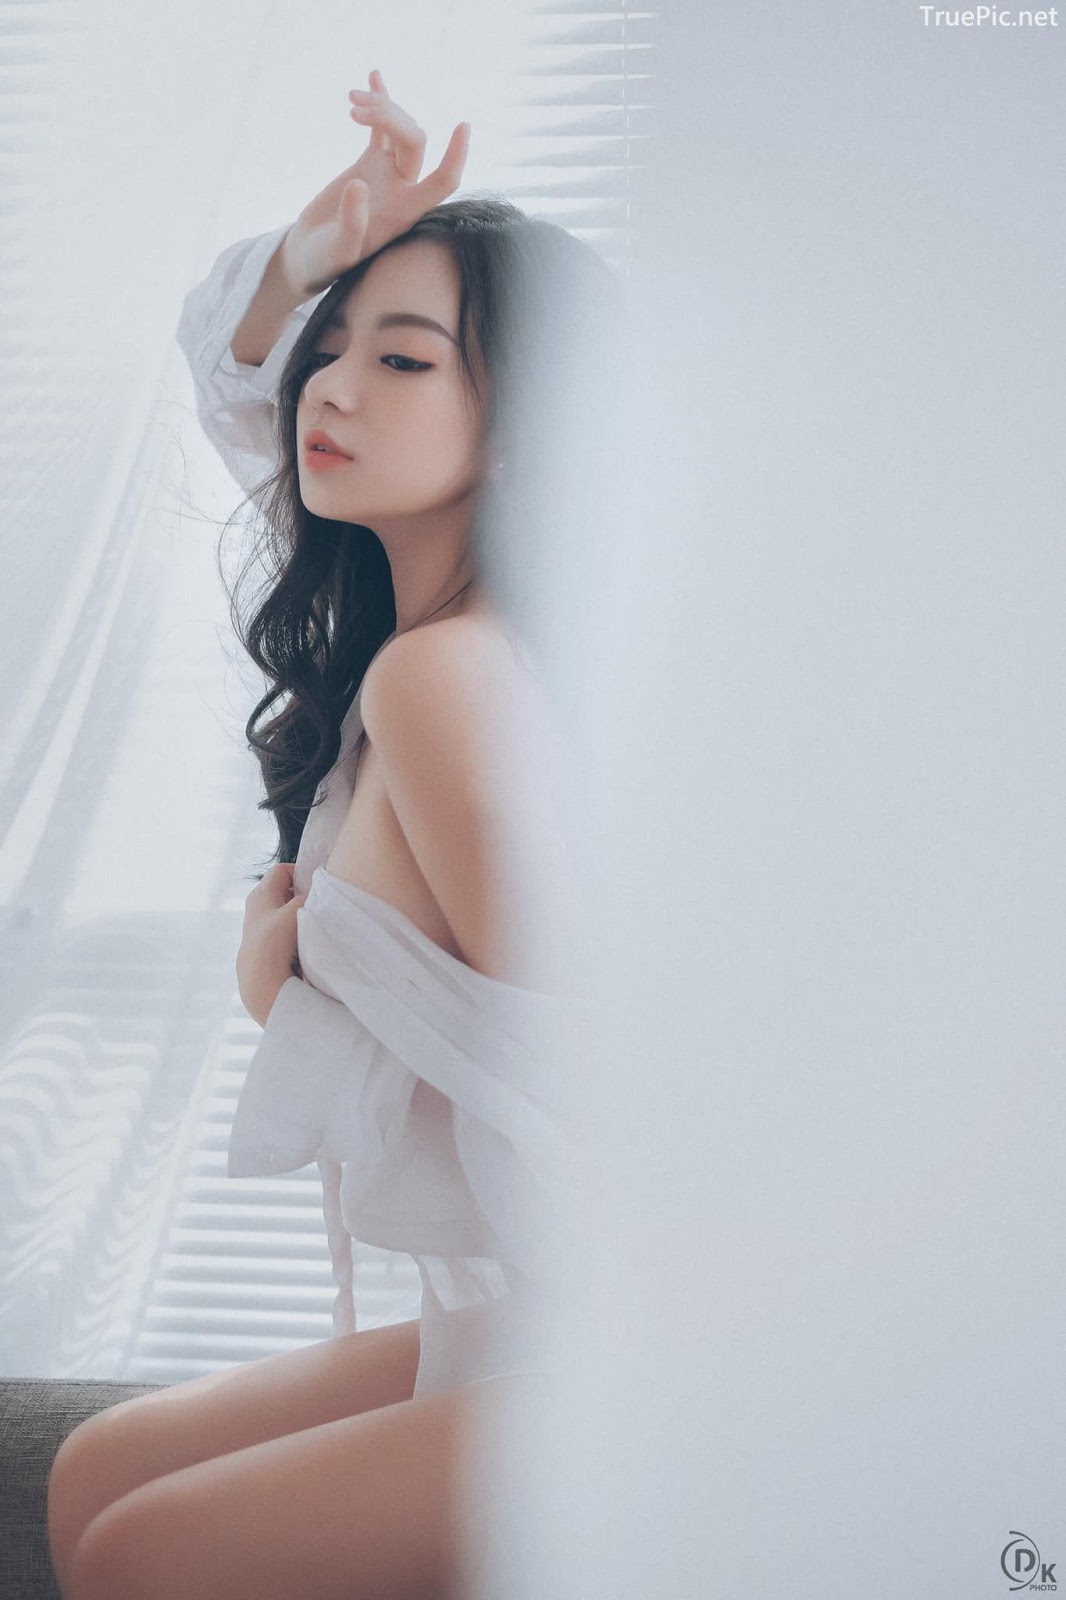 Vietnamese Sexy Model - Vu Ngoc Kim Chi - Beautiful in white - TruePic.net- Picture 10